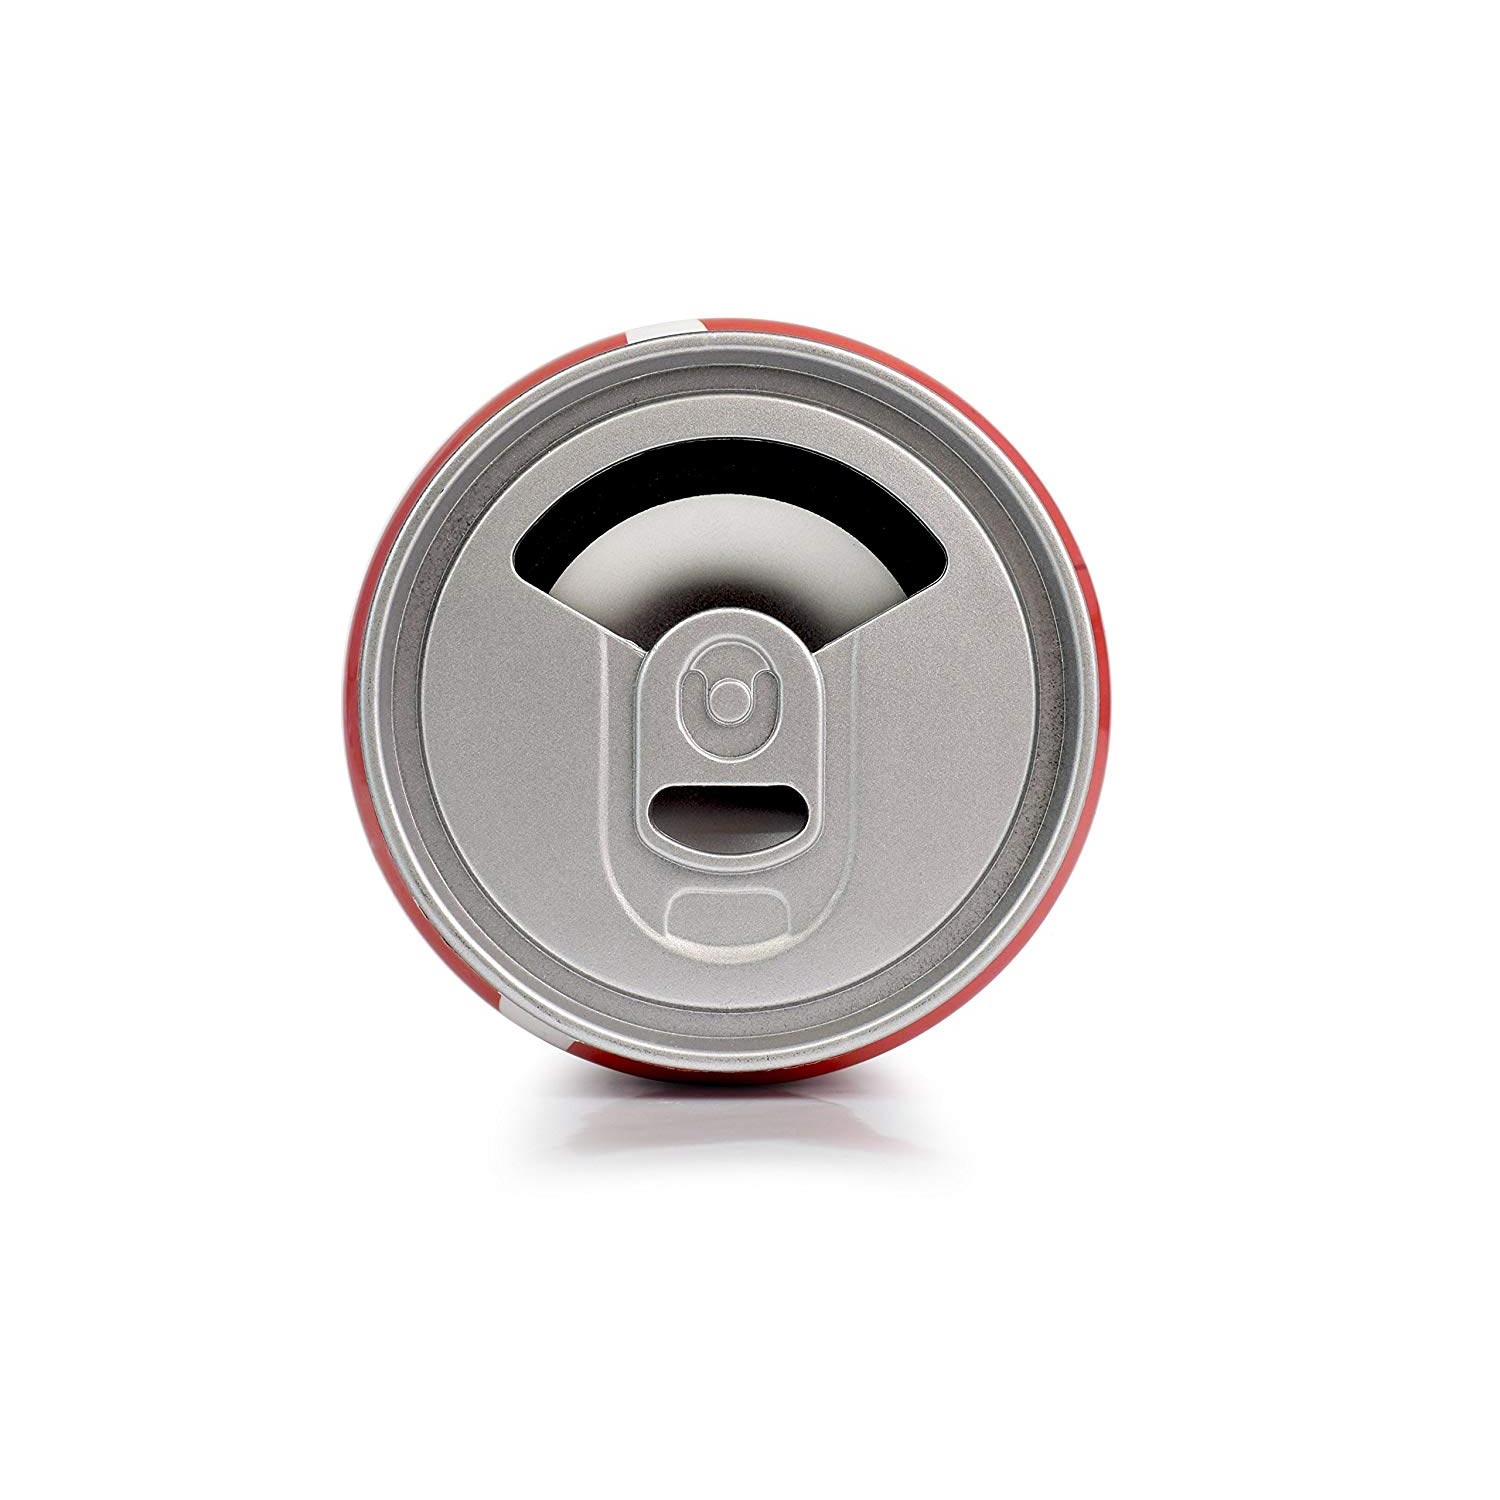 Coca Cola BT Can Speaker with FM Radio